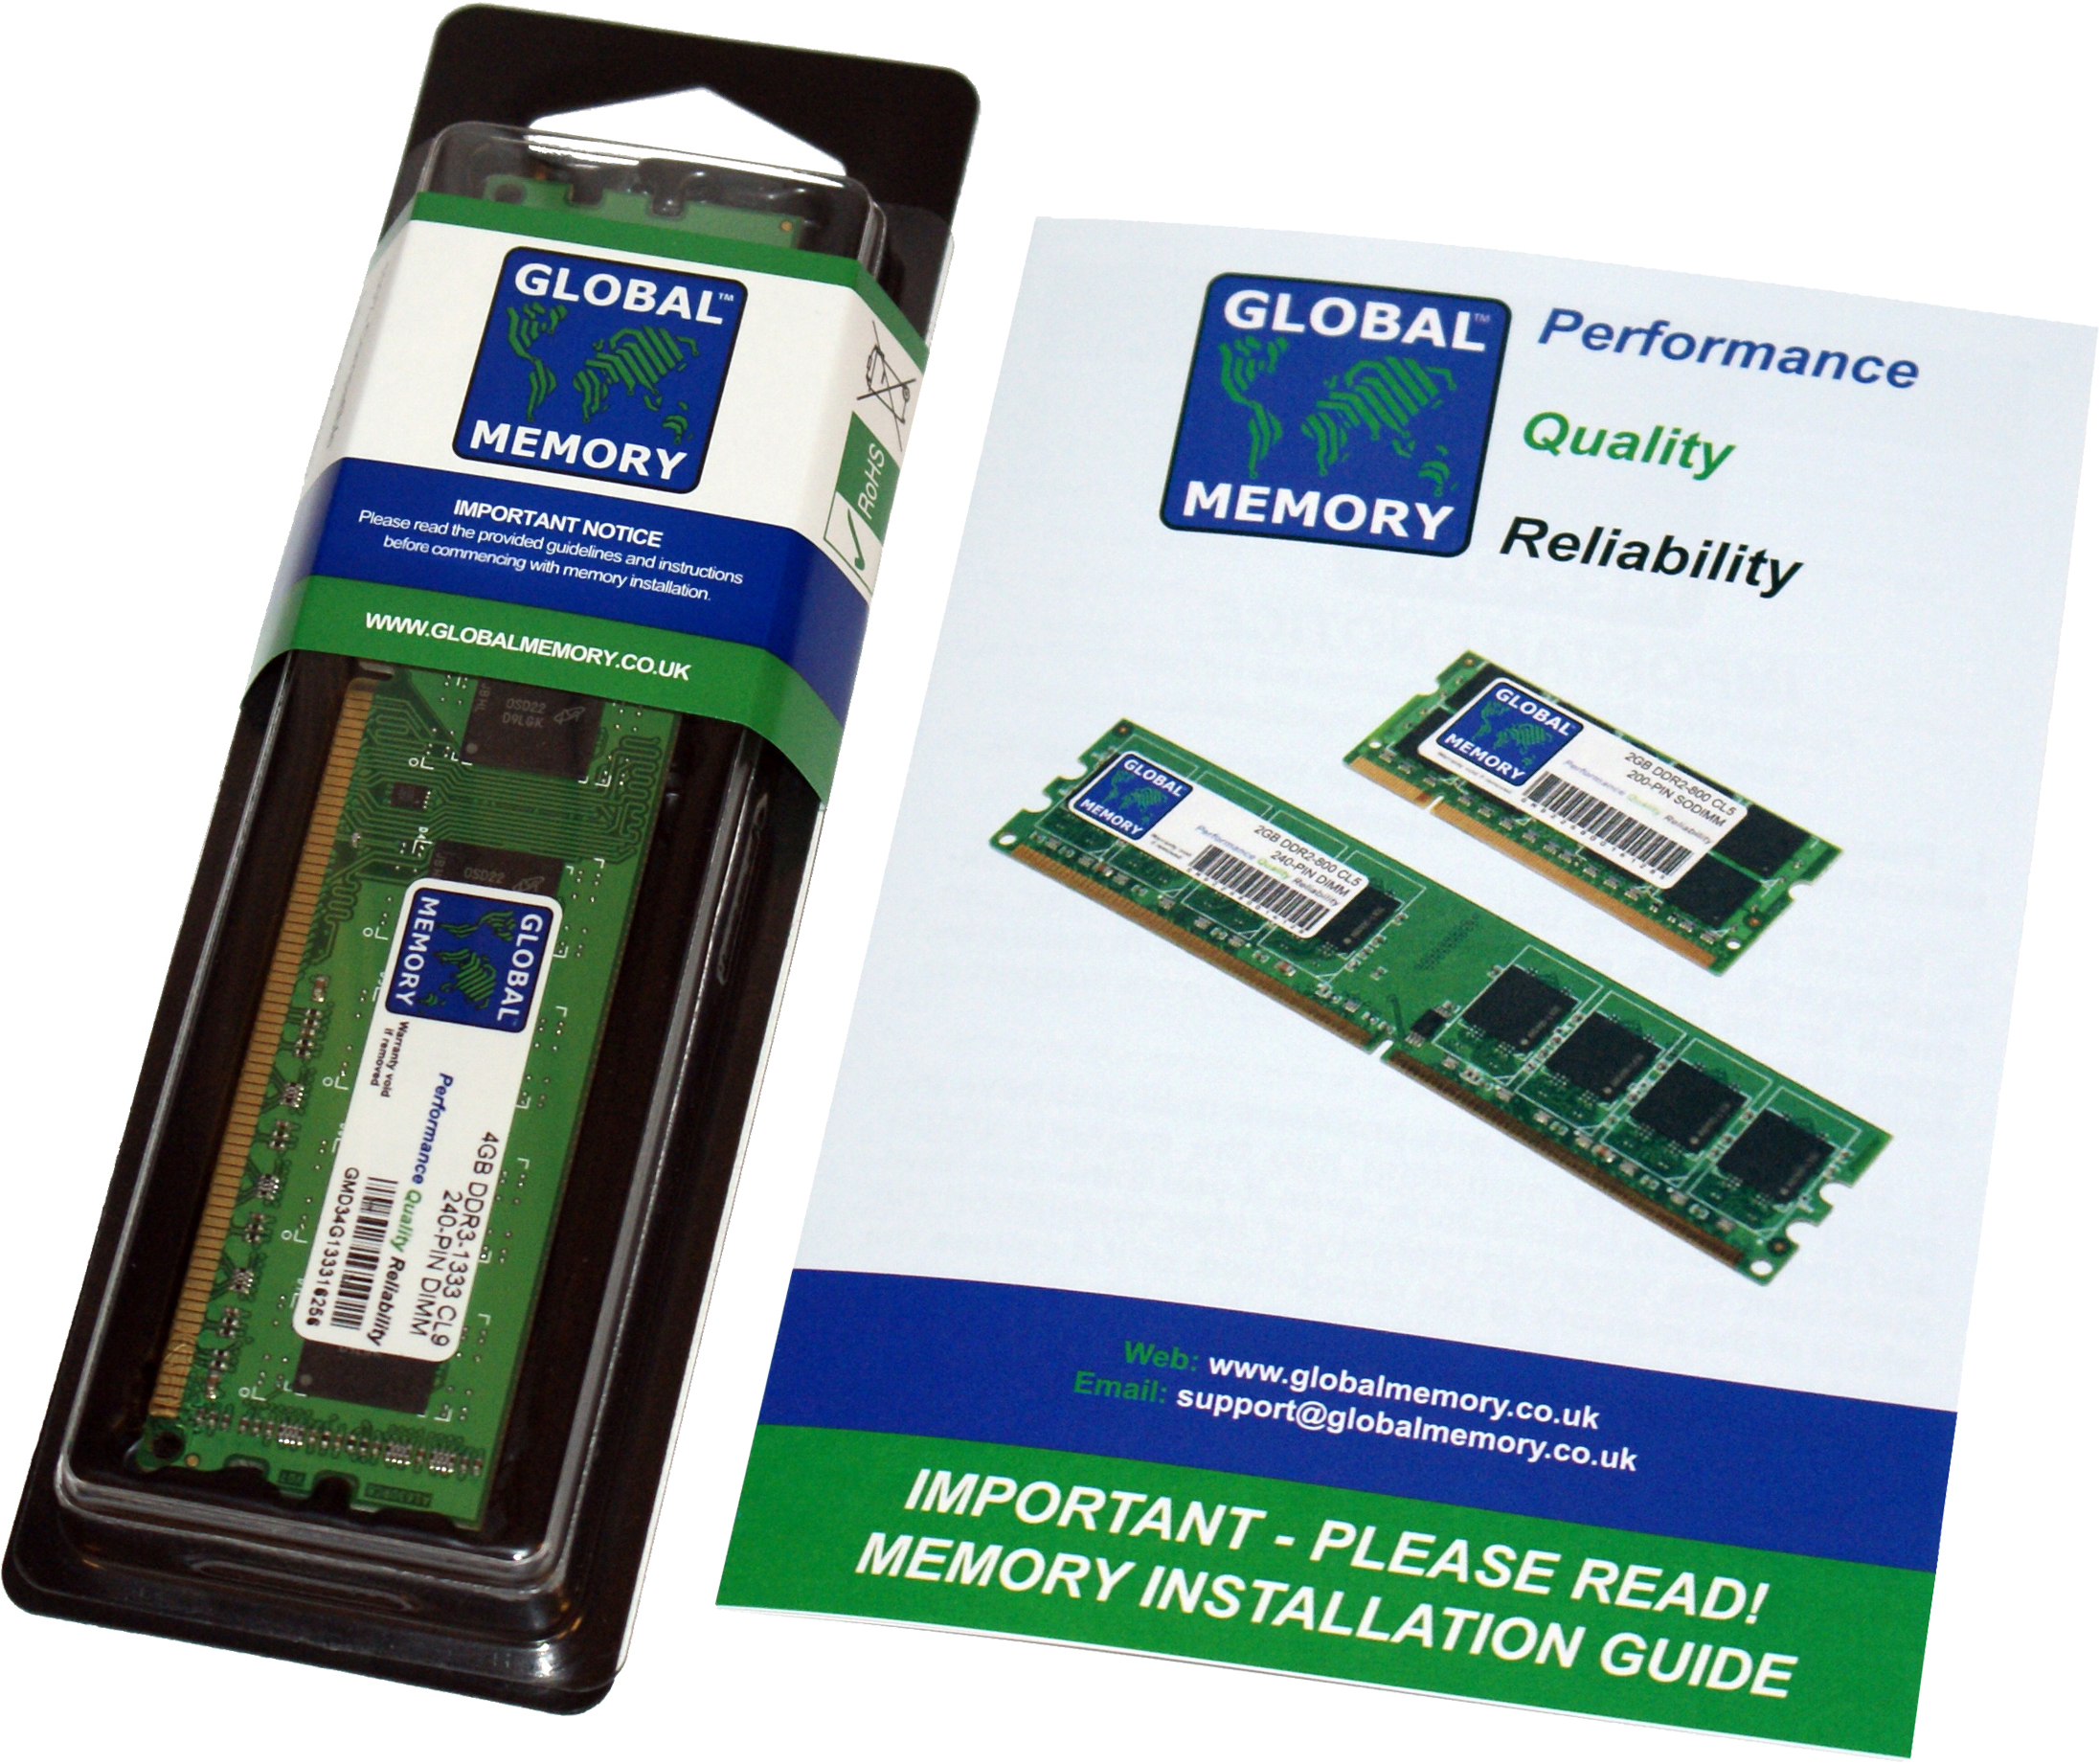 4GB DDR4 2133MHz PC4-17000 288-PIN DIMM MEMORY RAM FOR ADVENT PC DESKTOPS